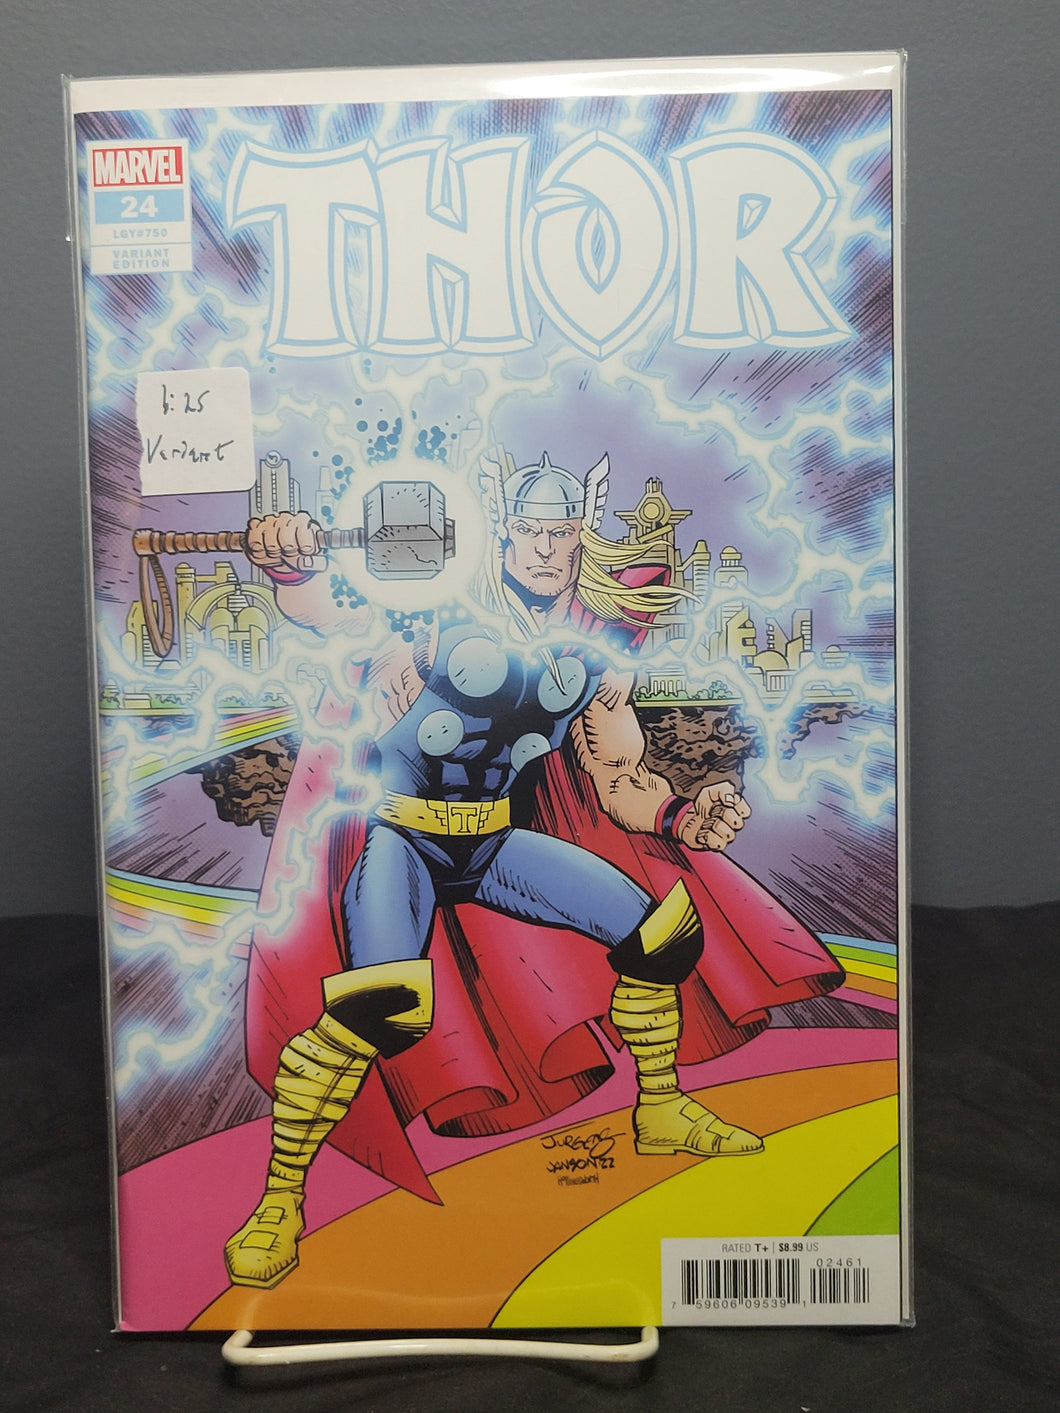 Thor #24 1:25 Variant